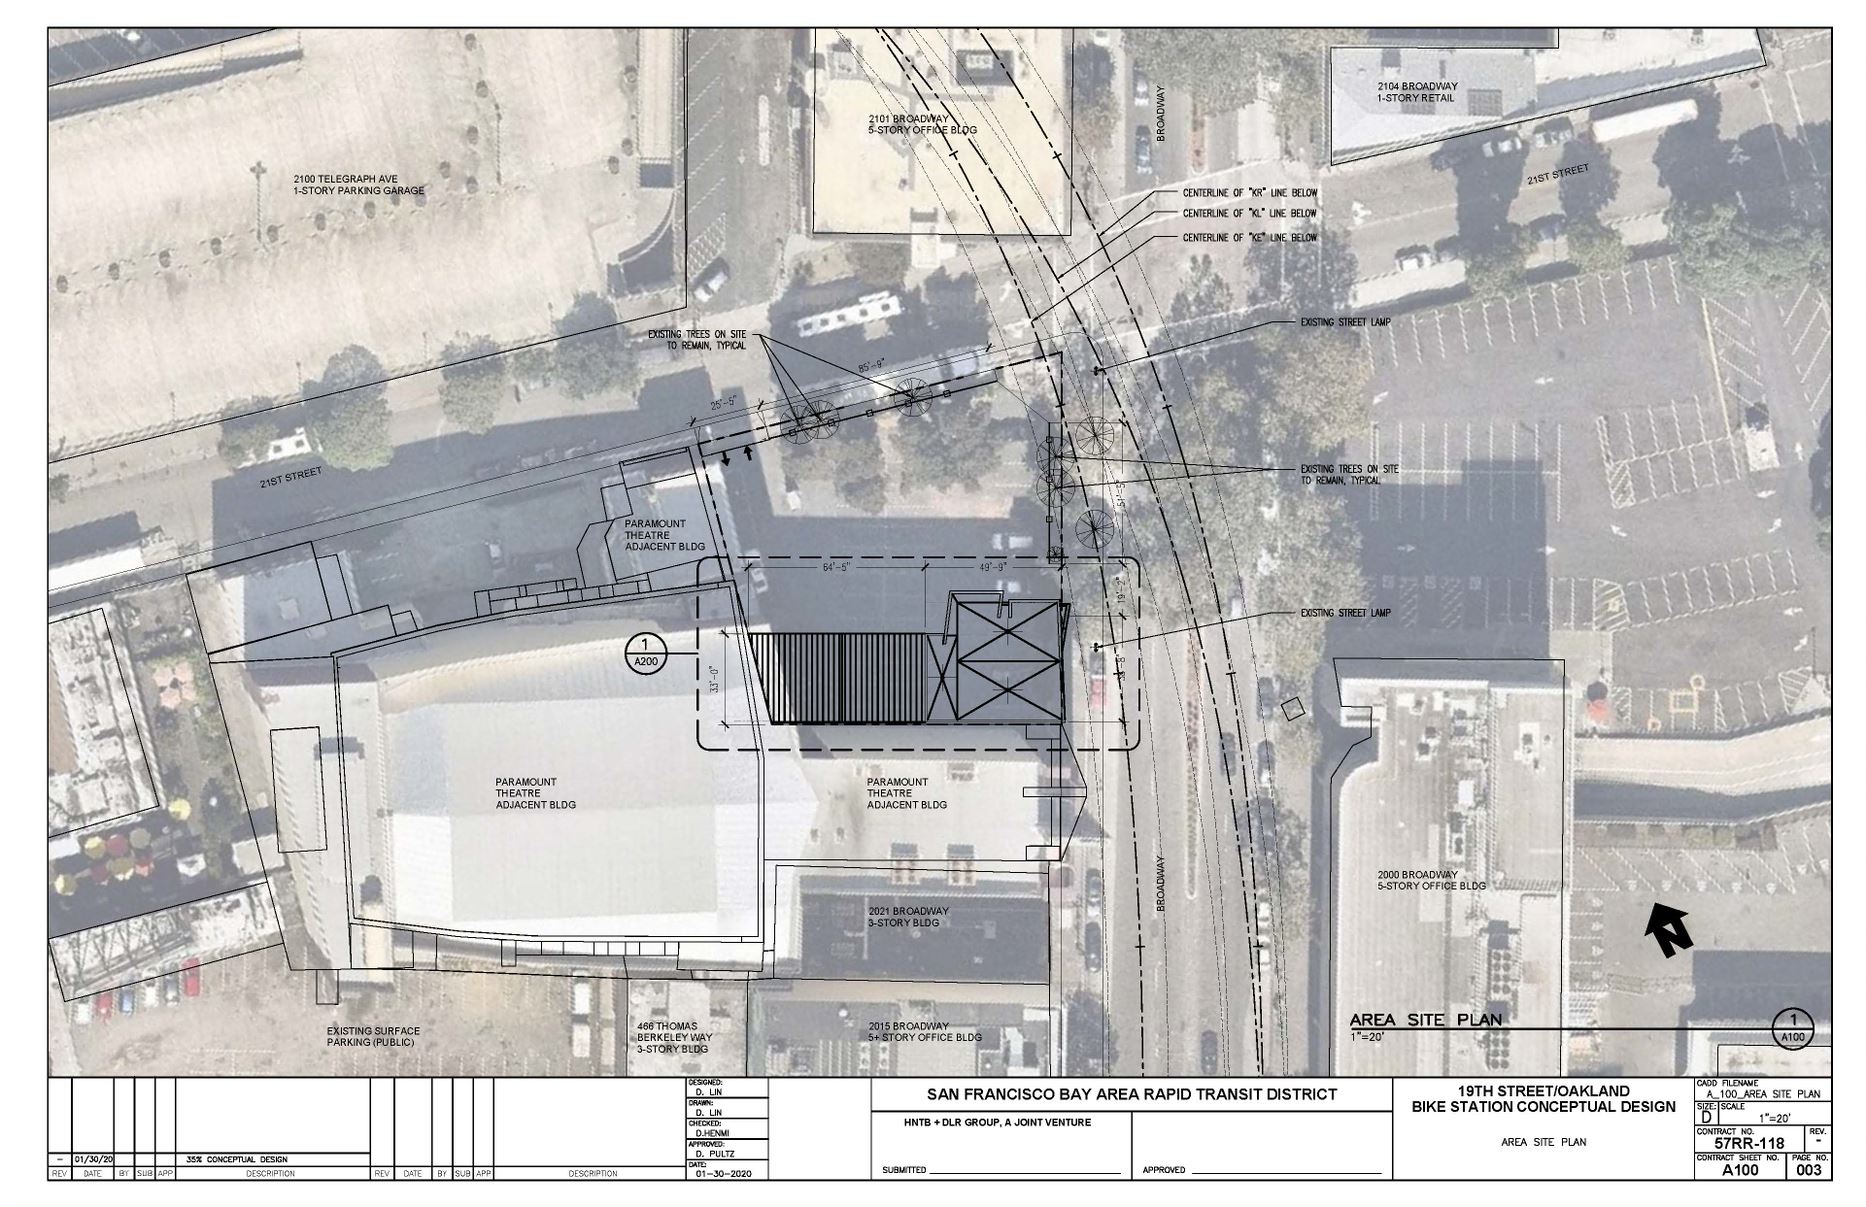 Planned 19th St bike station bird's eye view location rendering